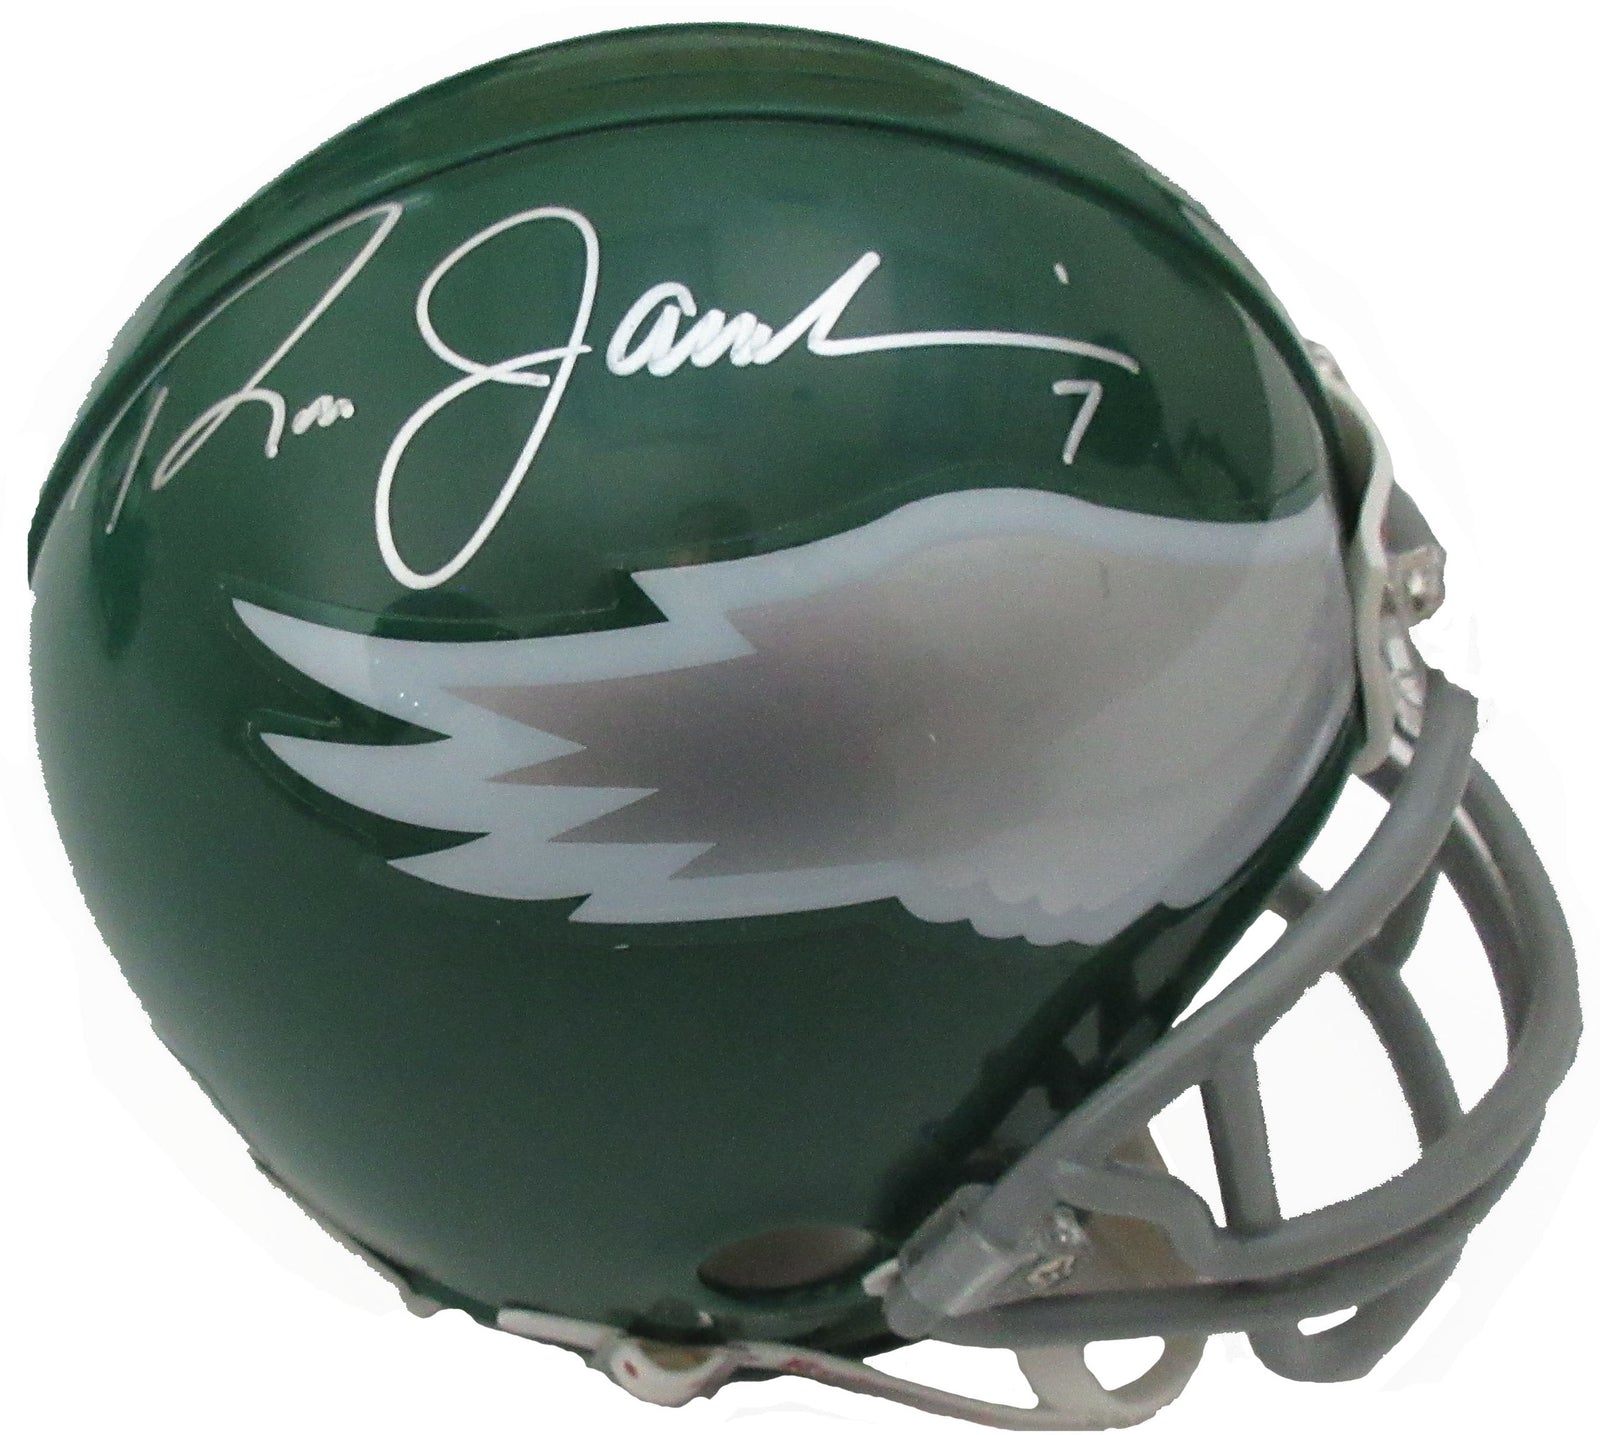 Randall Cunningham Signed & Inscribed Full Size Helmet – Eagles AMP